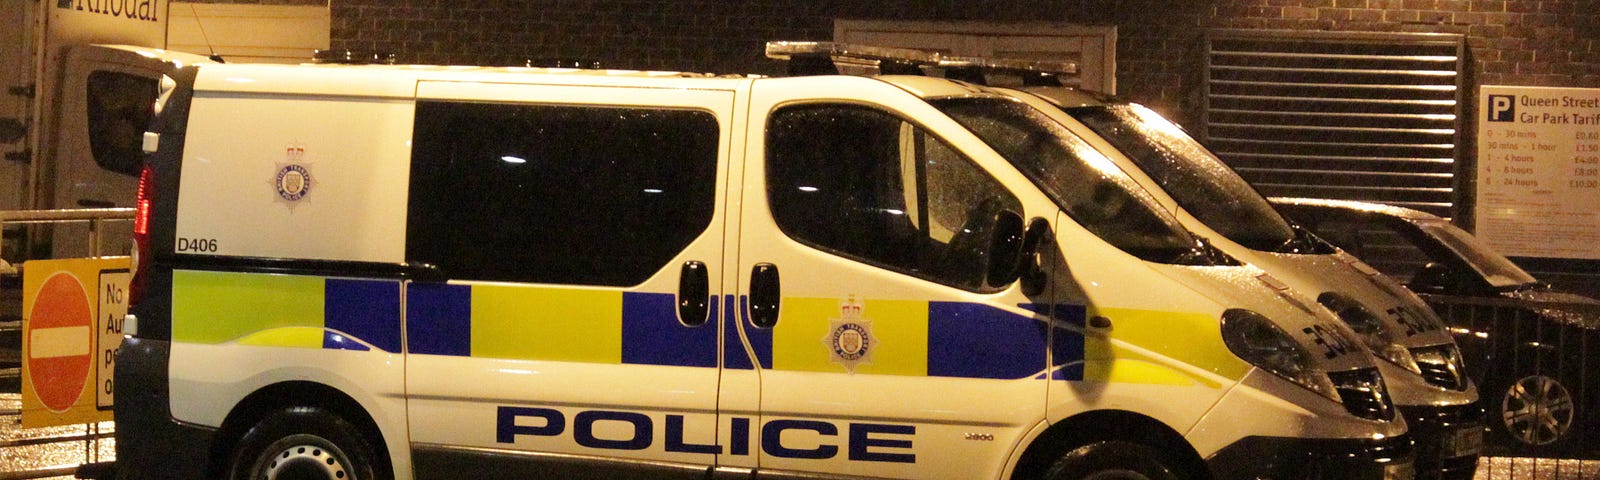 British Police van in rain parked up in nighttime under street lighting